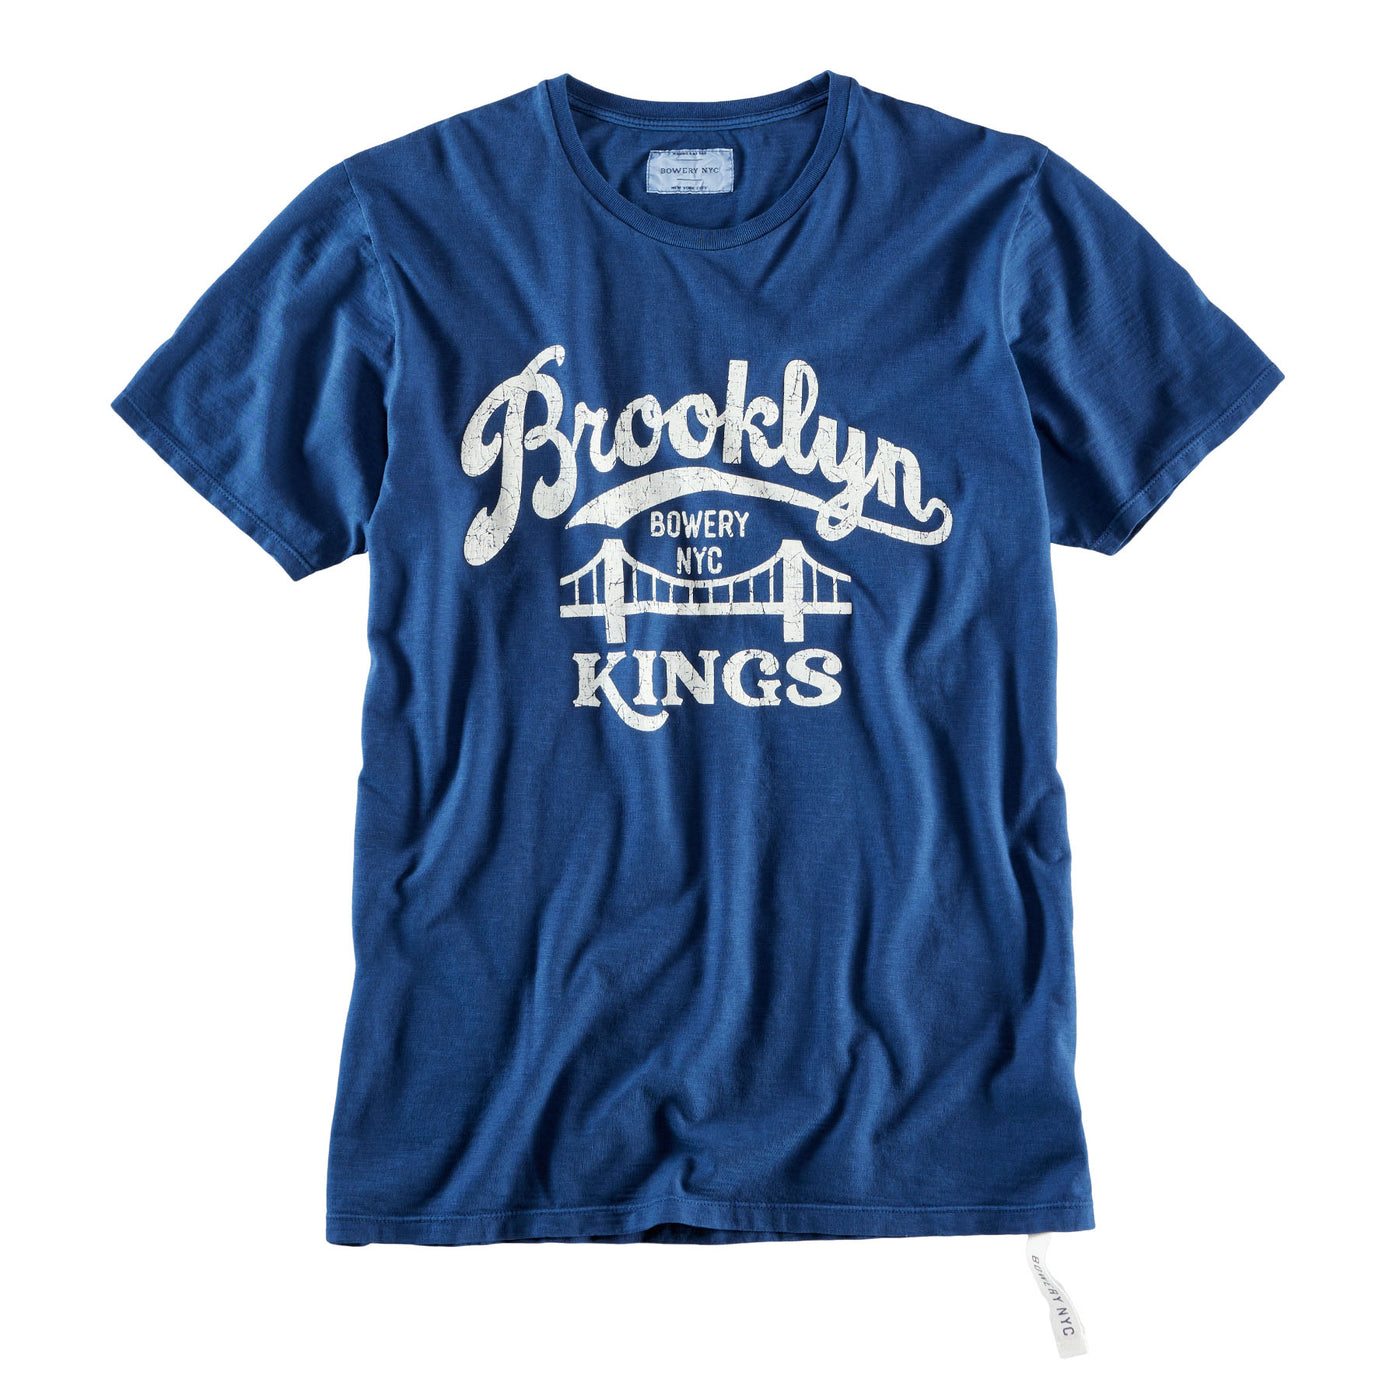 Bowery NYC T-Shirt Brooklyn Kings